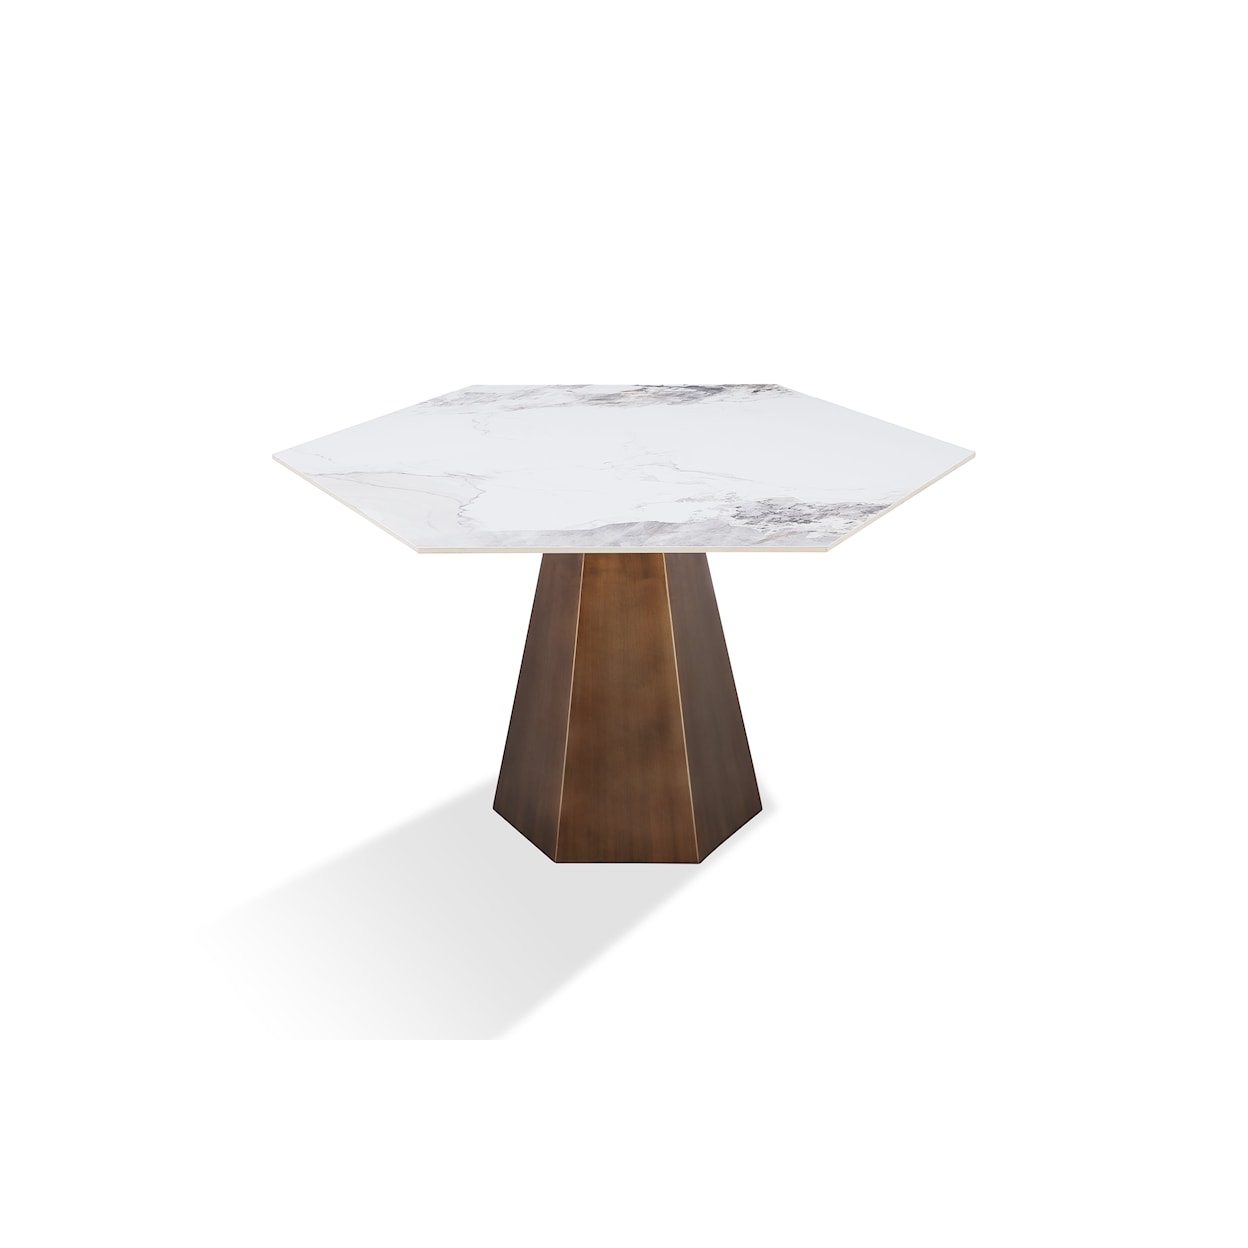 Modus International Crossroads 2.0 Balos Stone Top Hexagonal Dining Table